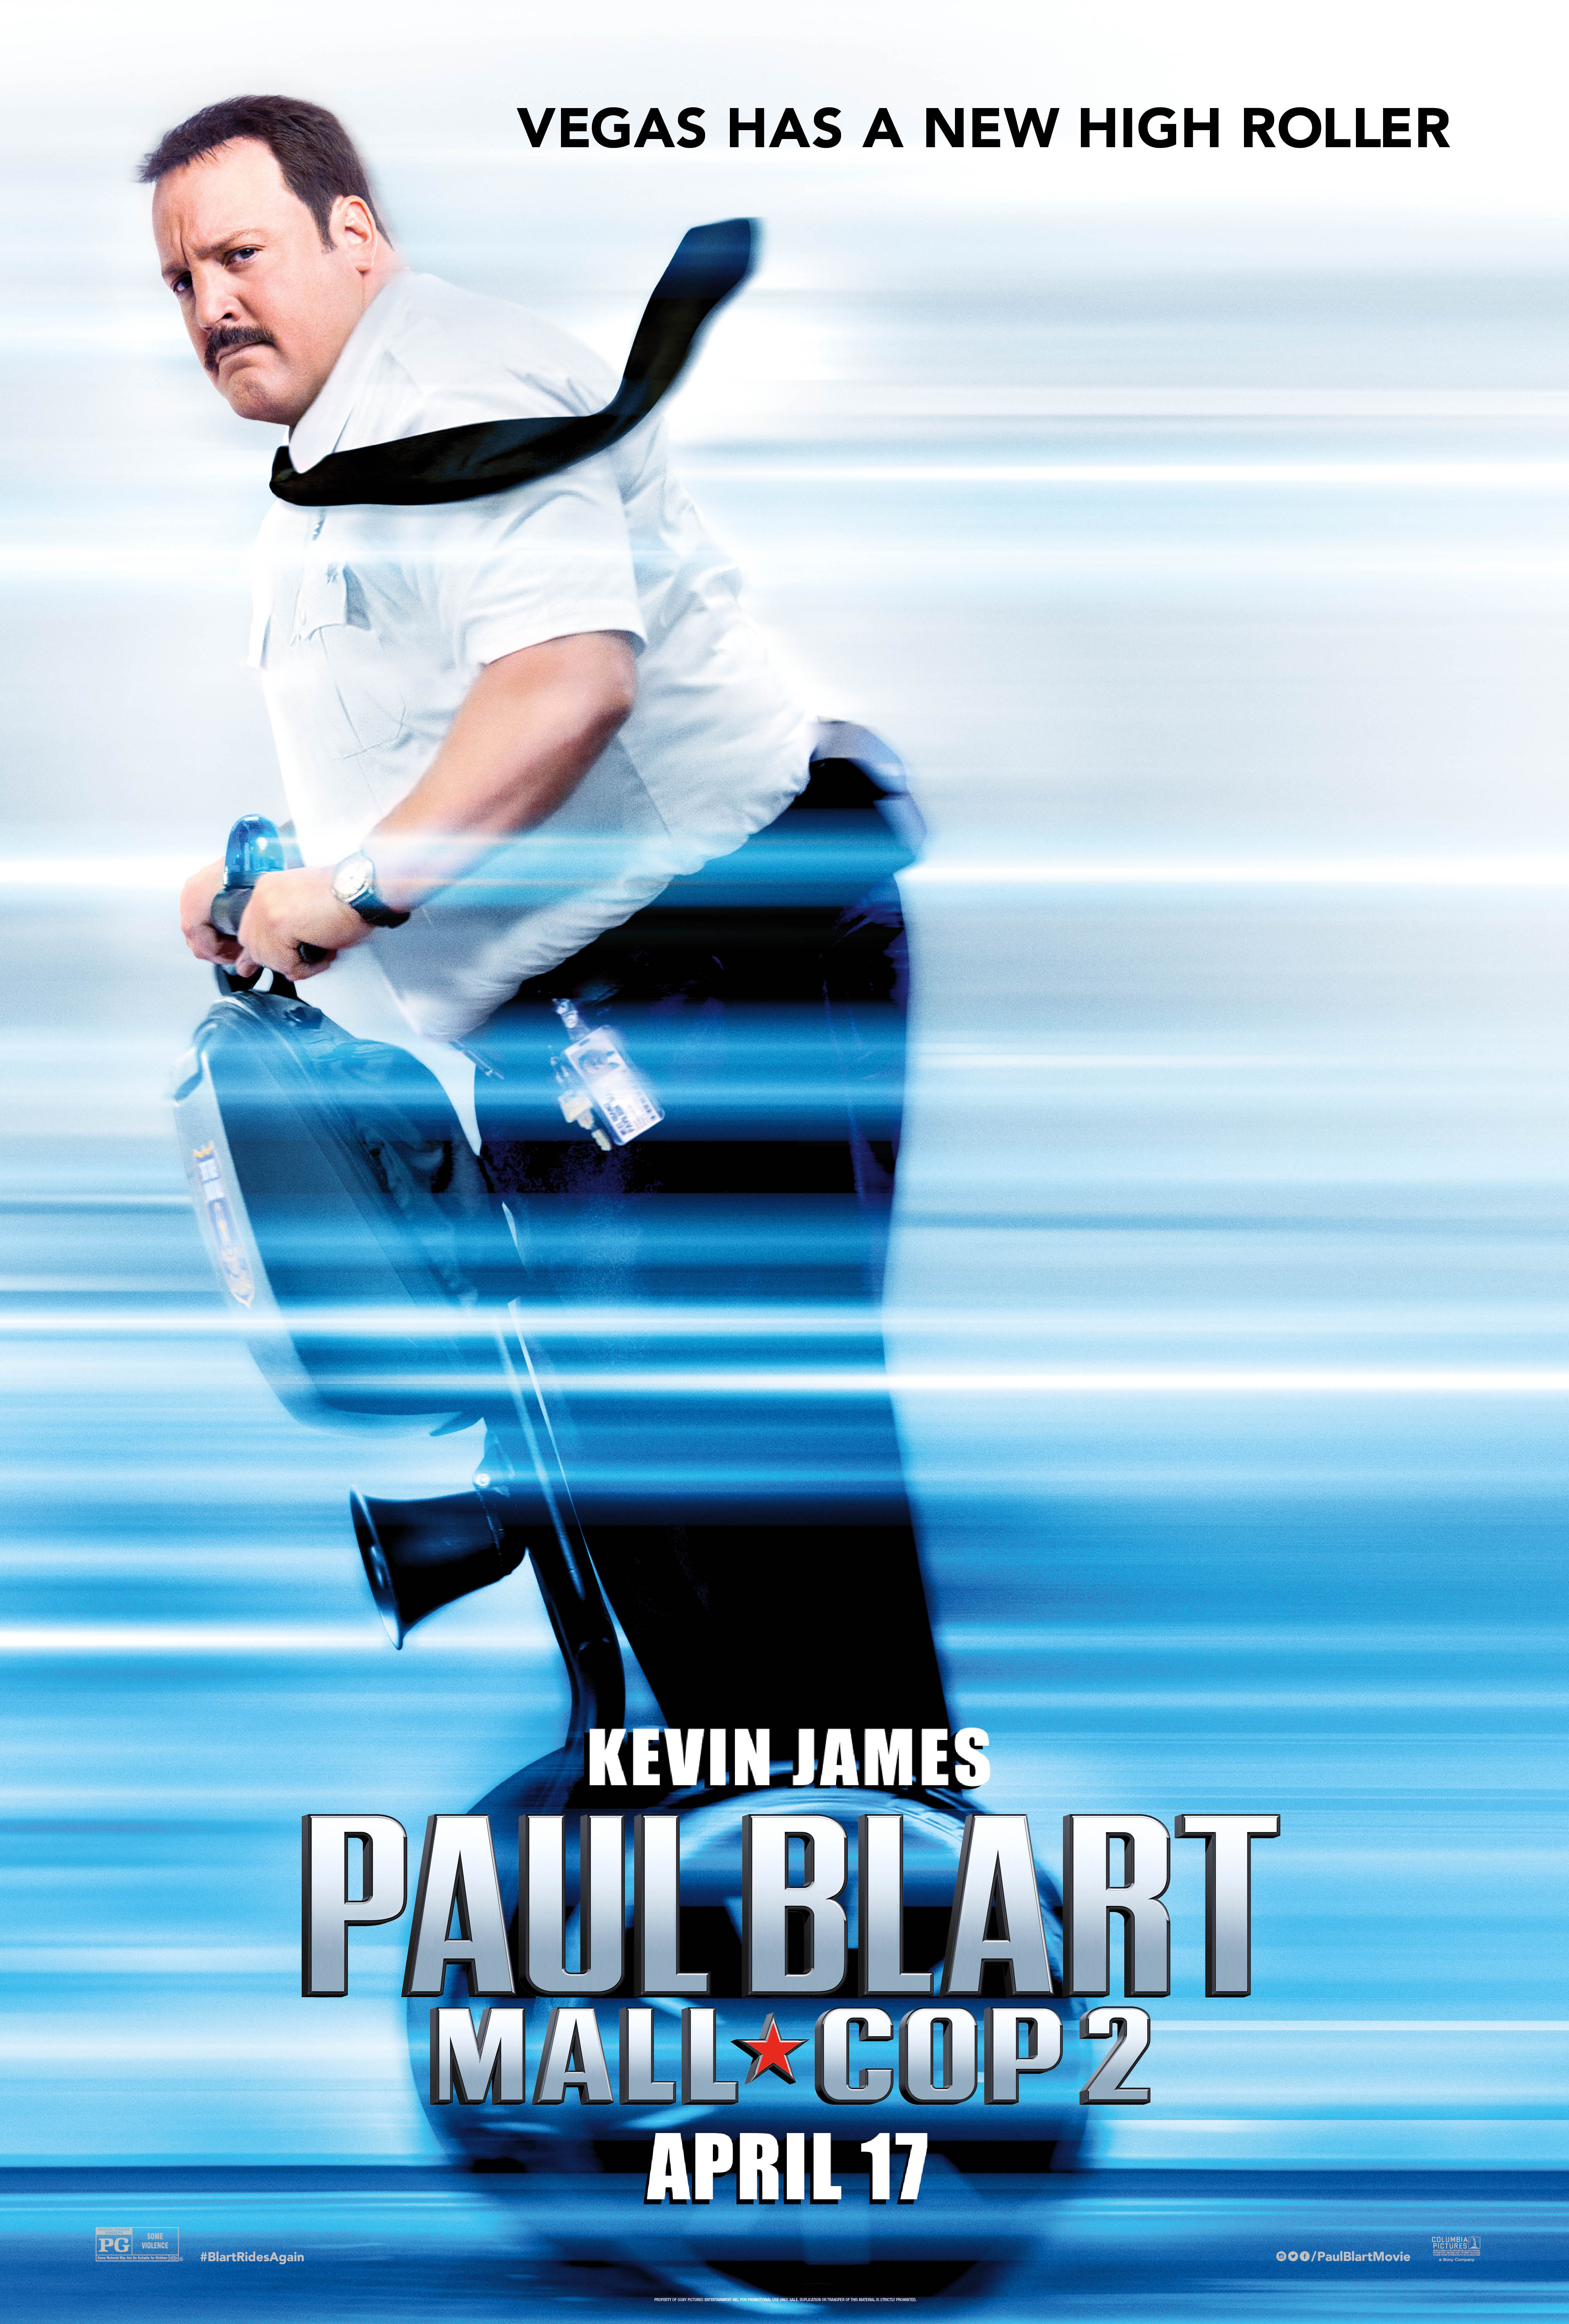 Paul Blart Mall Cop 2 Movie Review Dale Maxfield